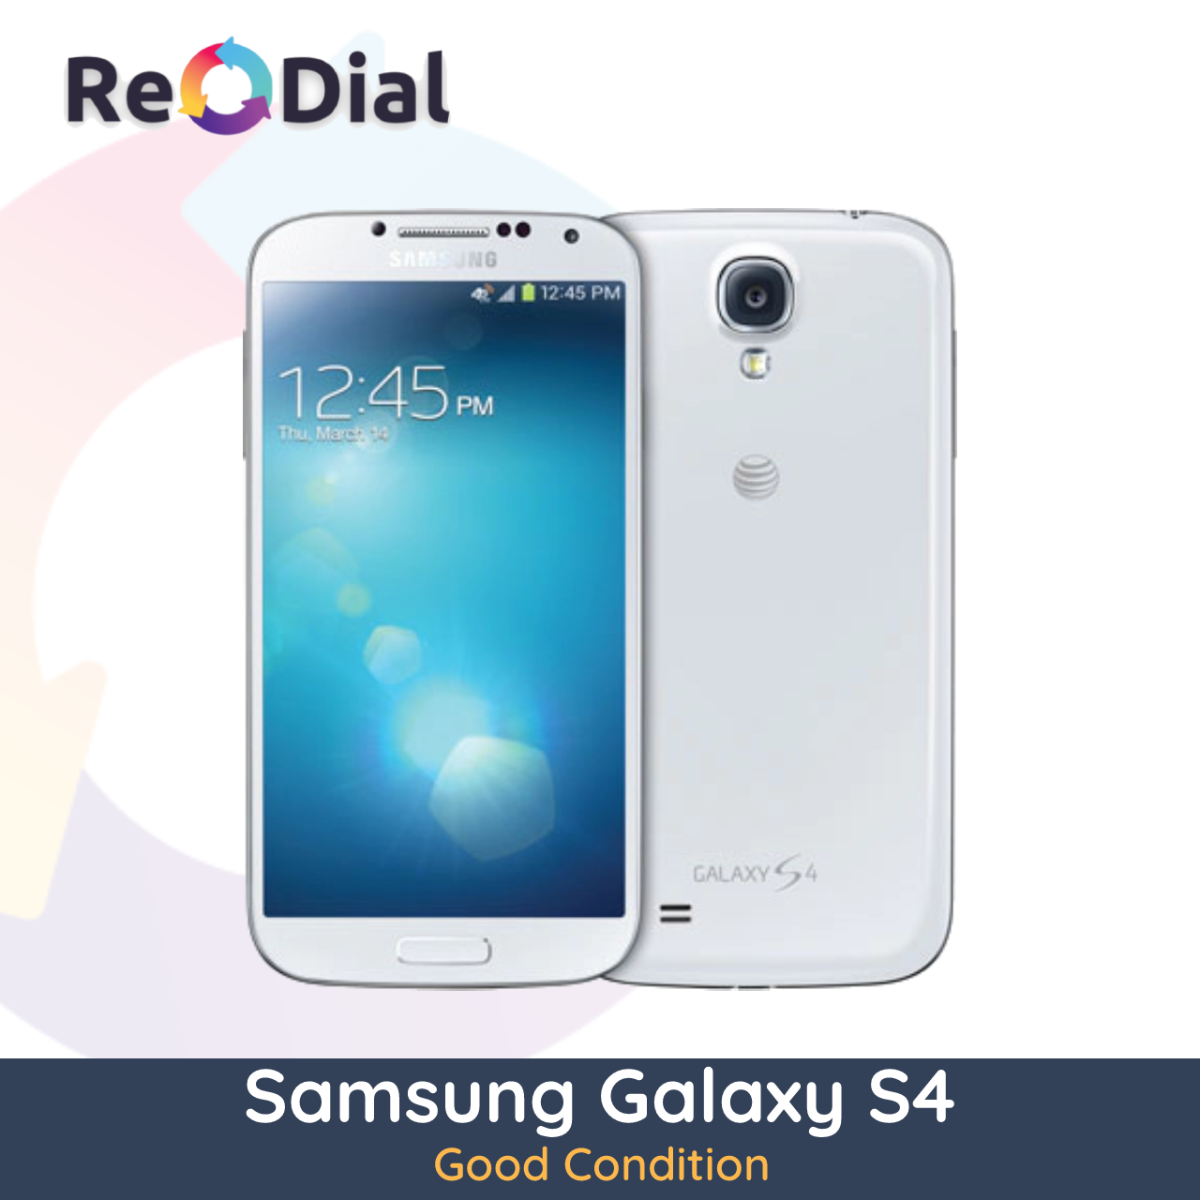 Samsung Galaxy S4 (I9506) - Good Condition